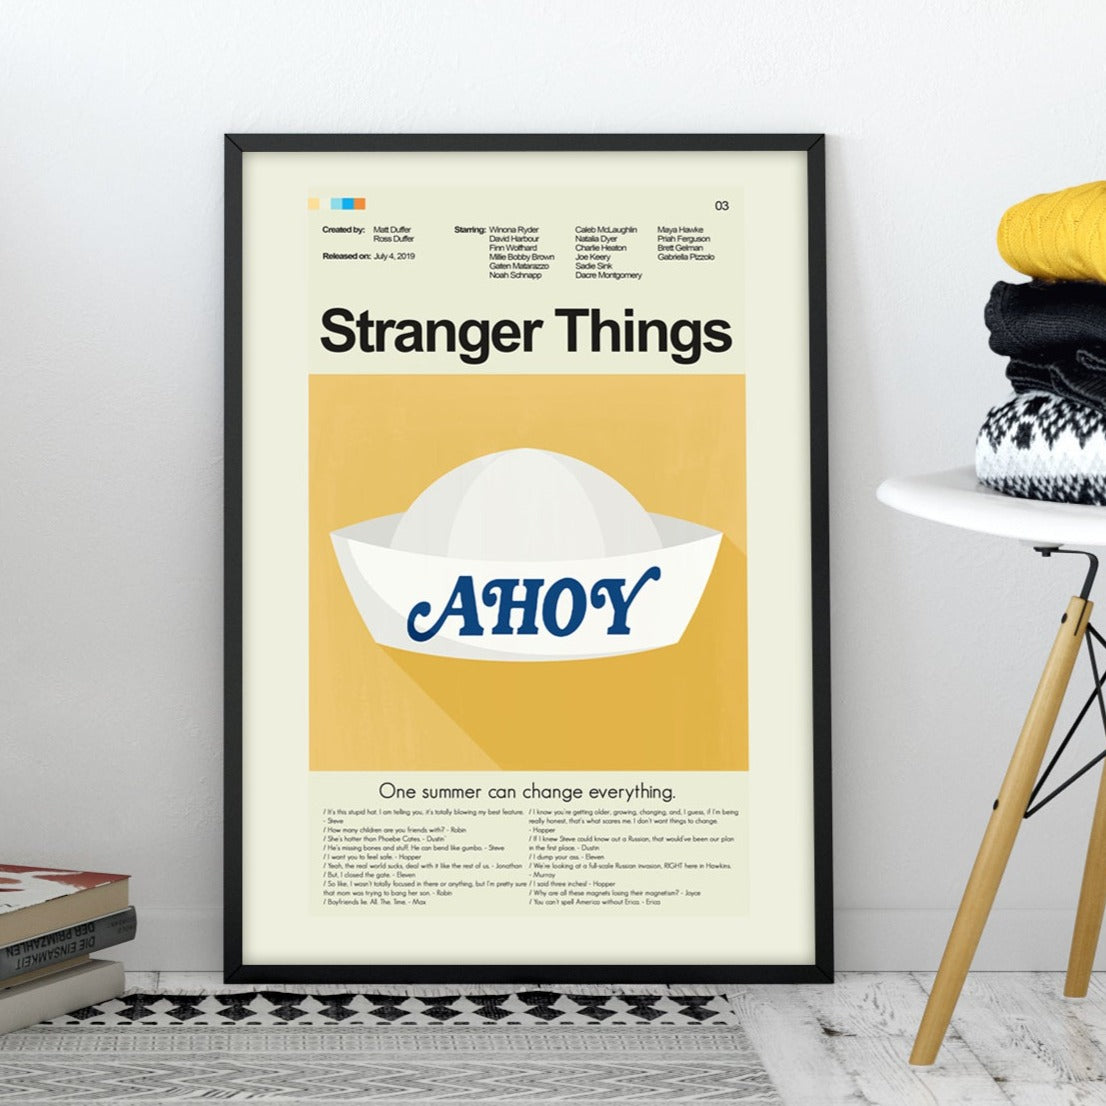 Stranger Things (Season 3) - Scoop's Ahoy Hat | 12"x18" Print Only